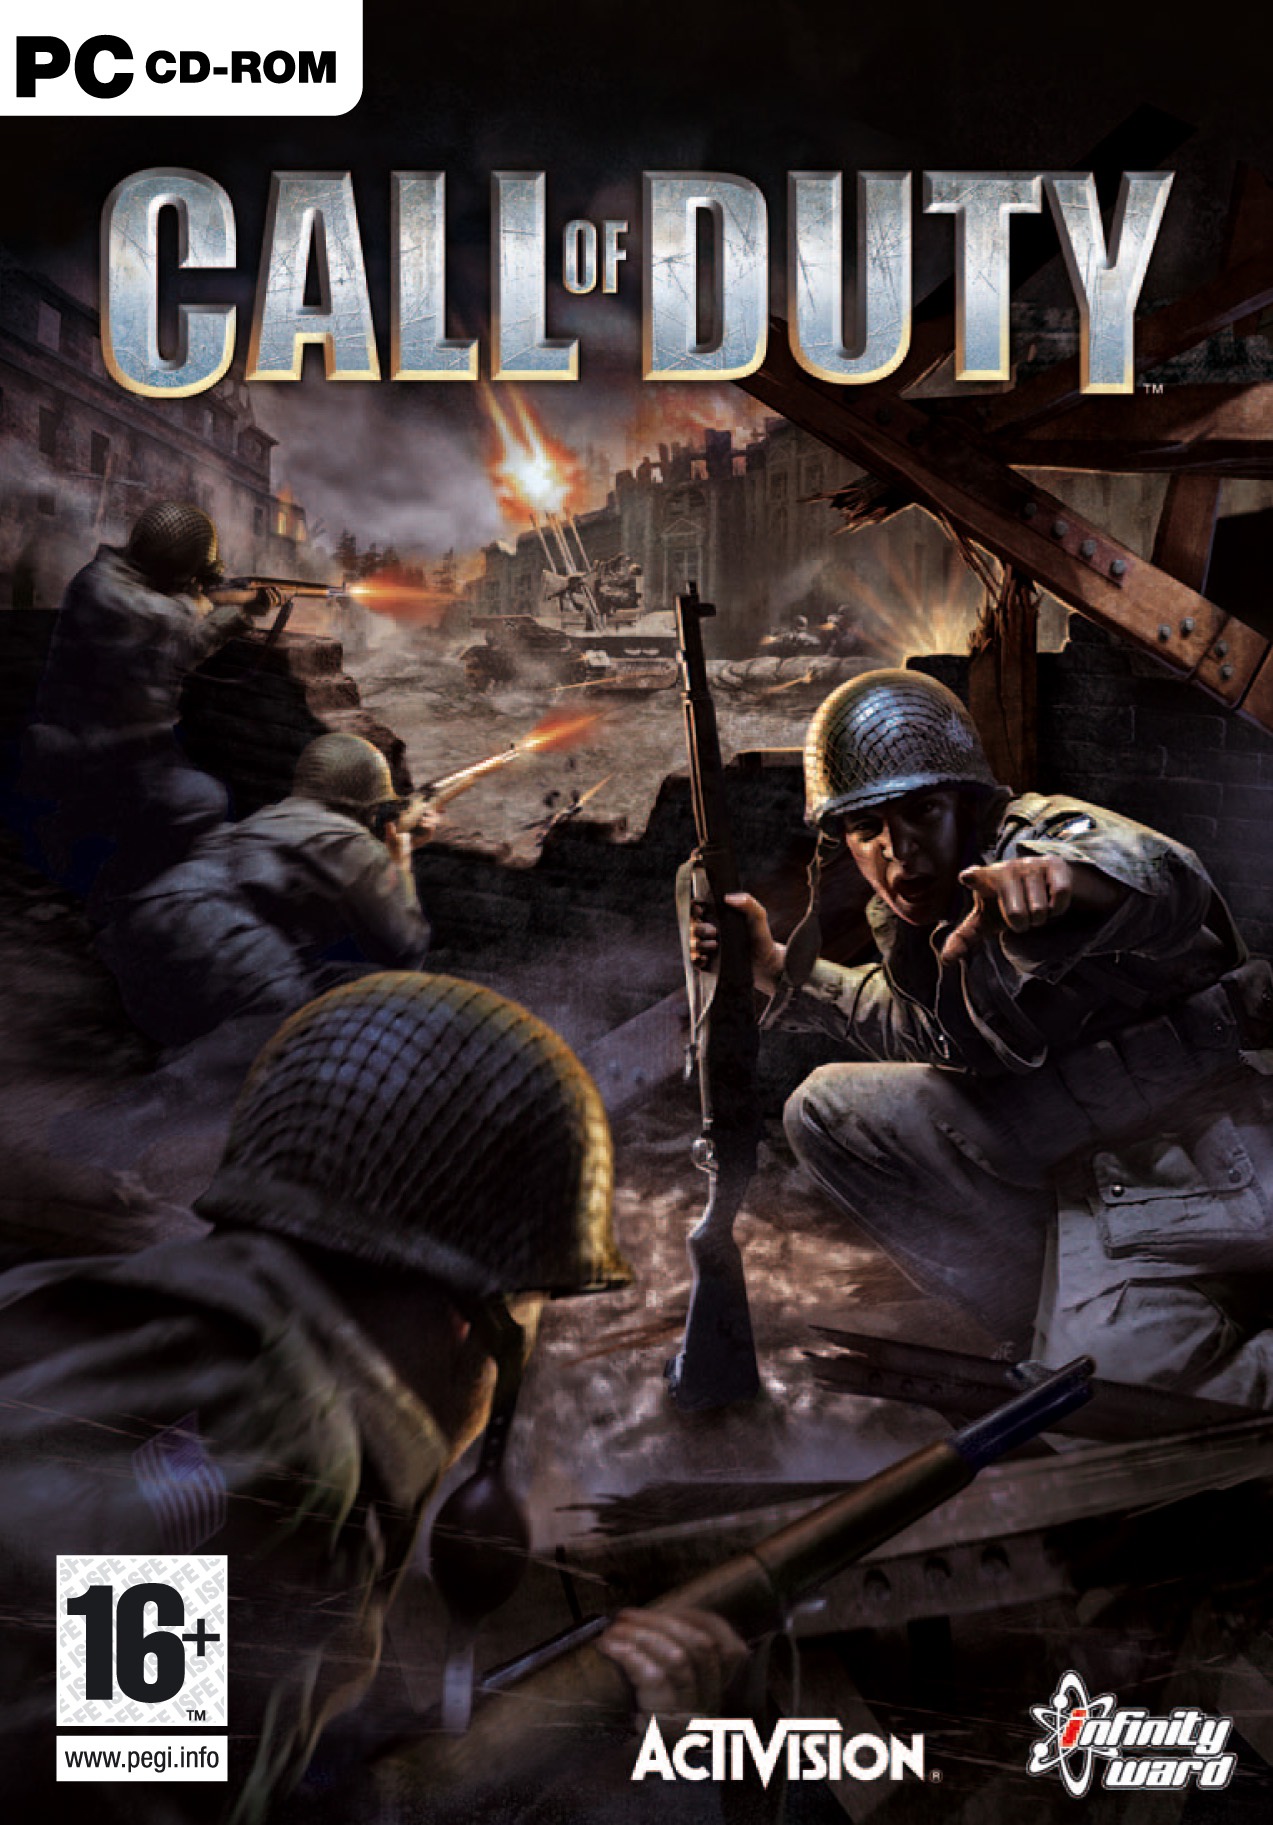 Call of Duty (series) | Call of Duty Wiki | FANDOM powered ... - 